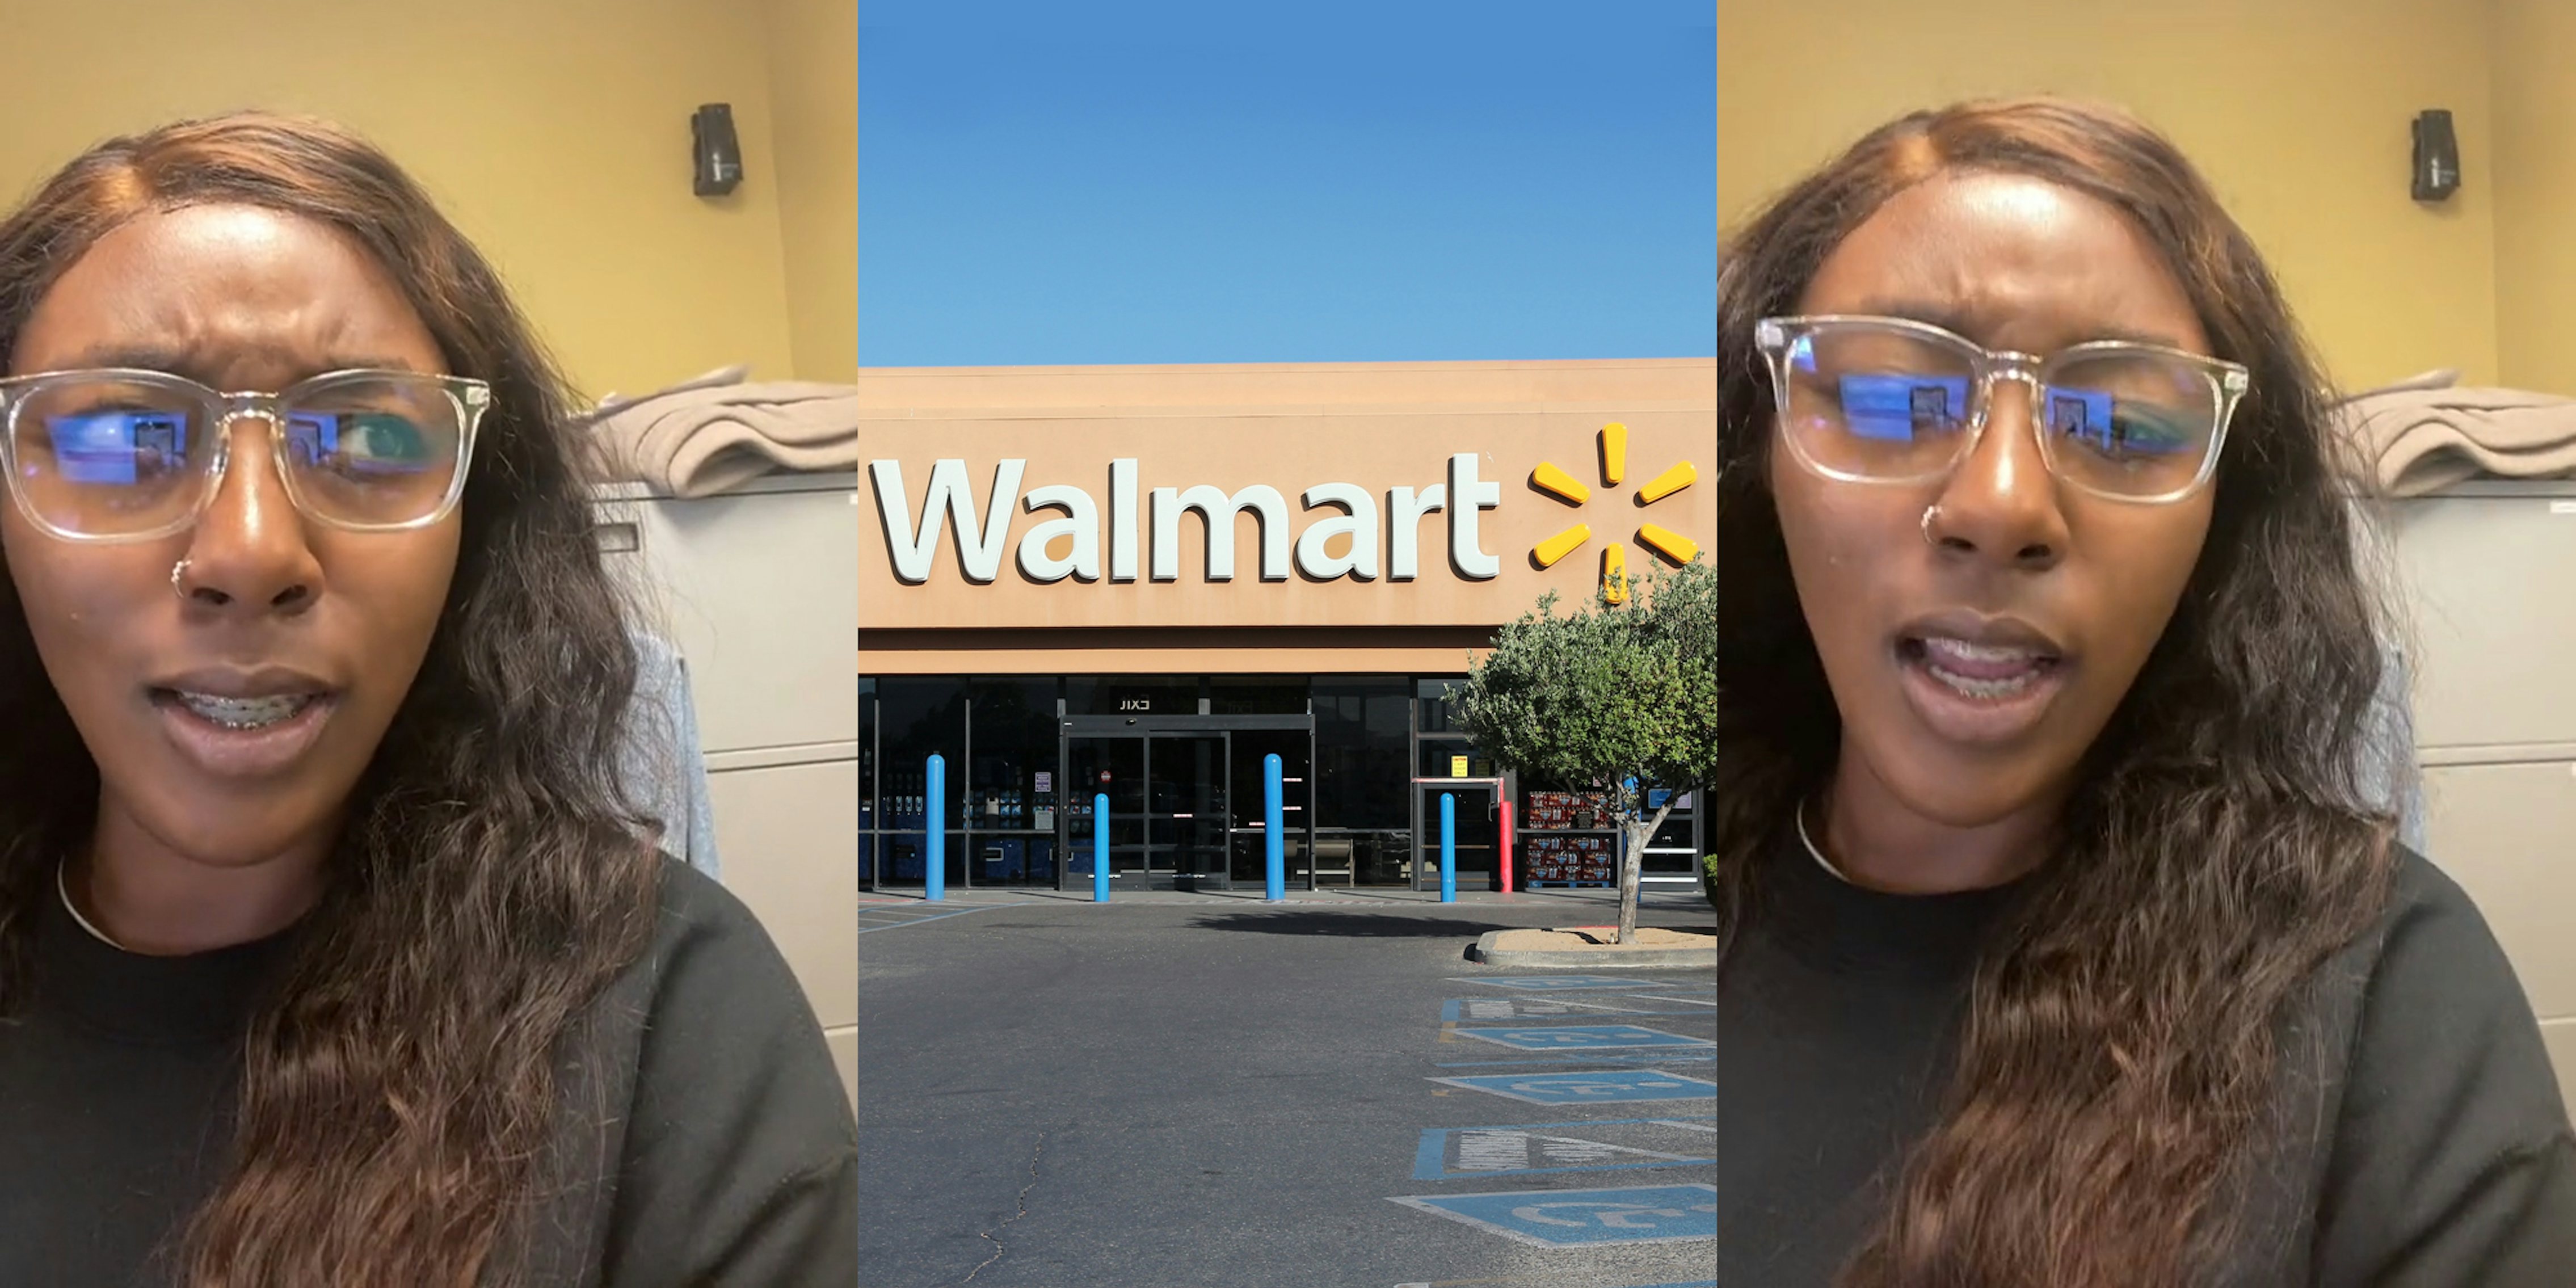 Walmart employee speaking (l) Walmart building with sign and parking lot (c) Walmart employee speaking (r)